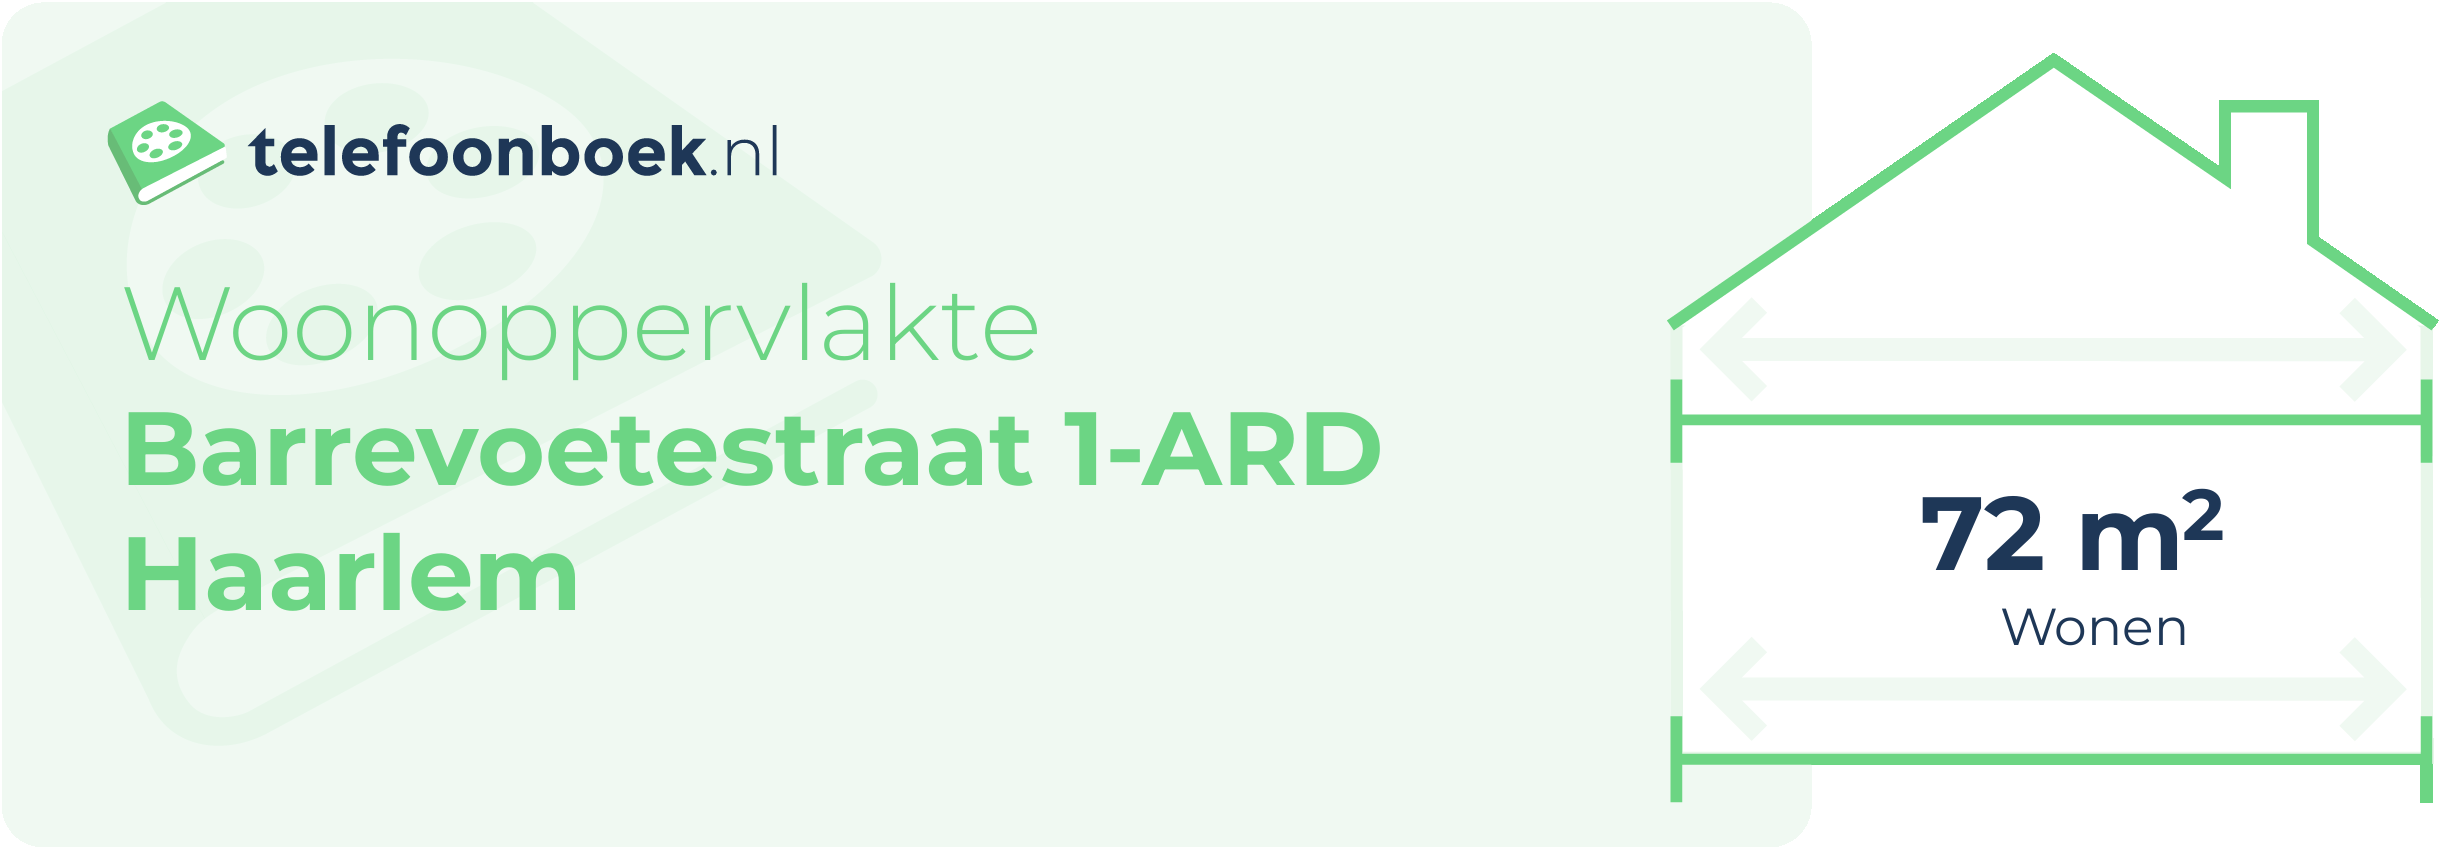 Woonoppervlakte Barrevoetestraat 1-ARD Haarlem